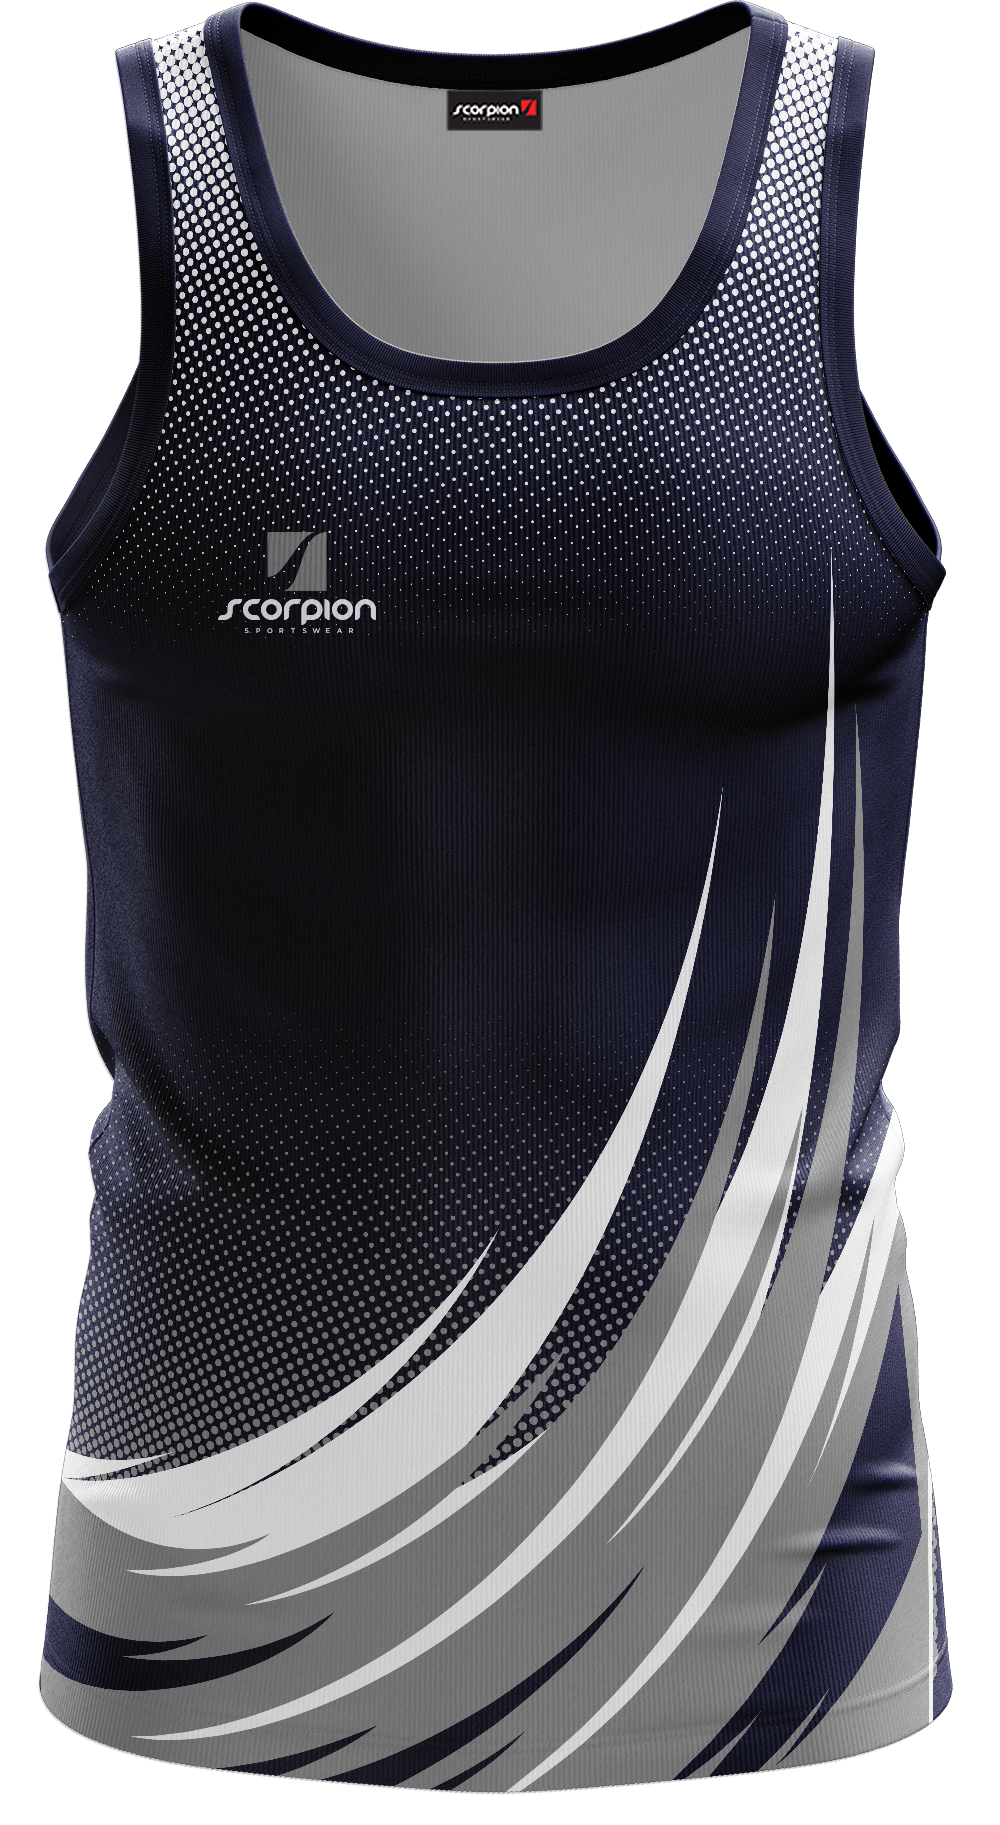 Scorpion Vests Pattern 5 - Navy/Grey/White